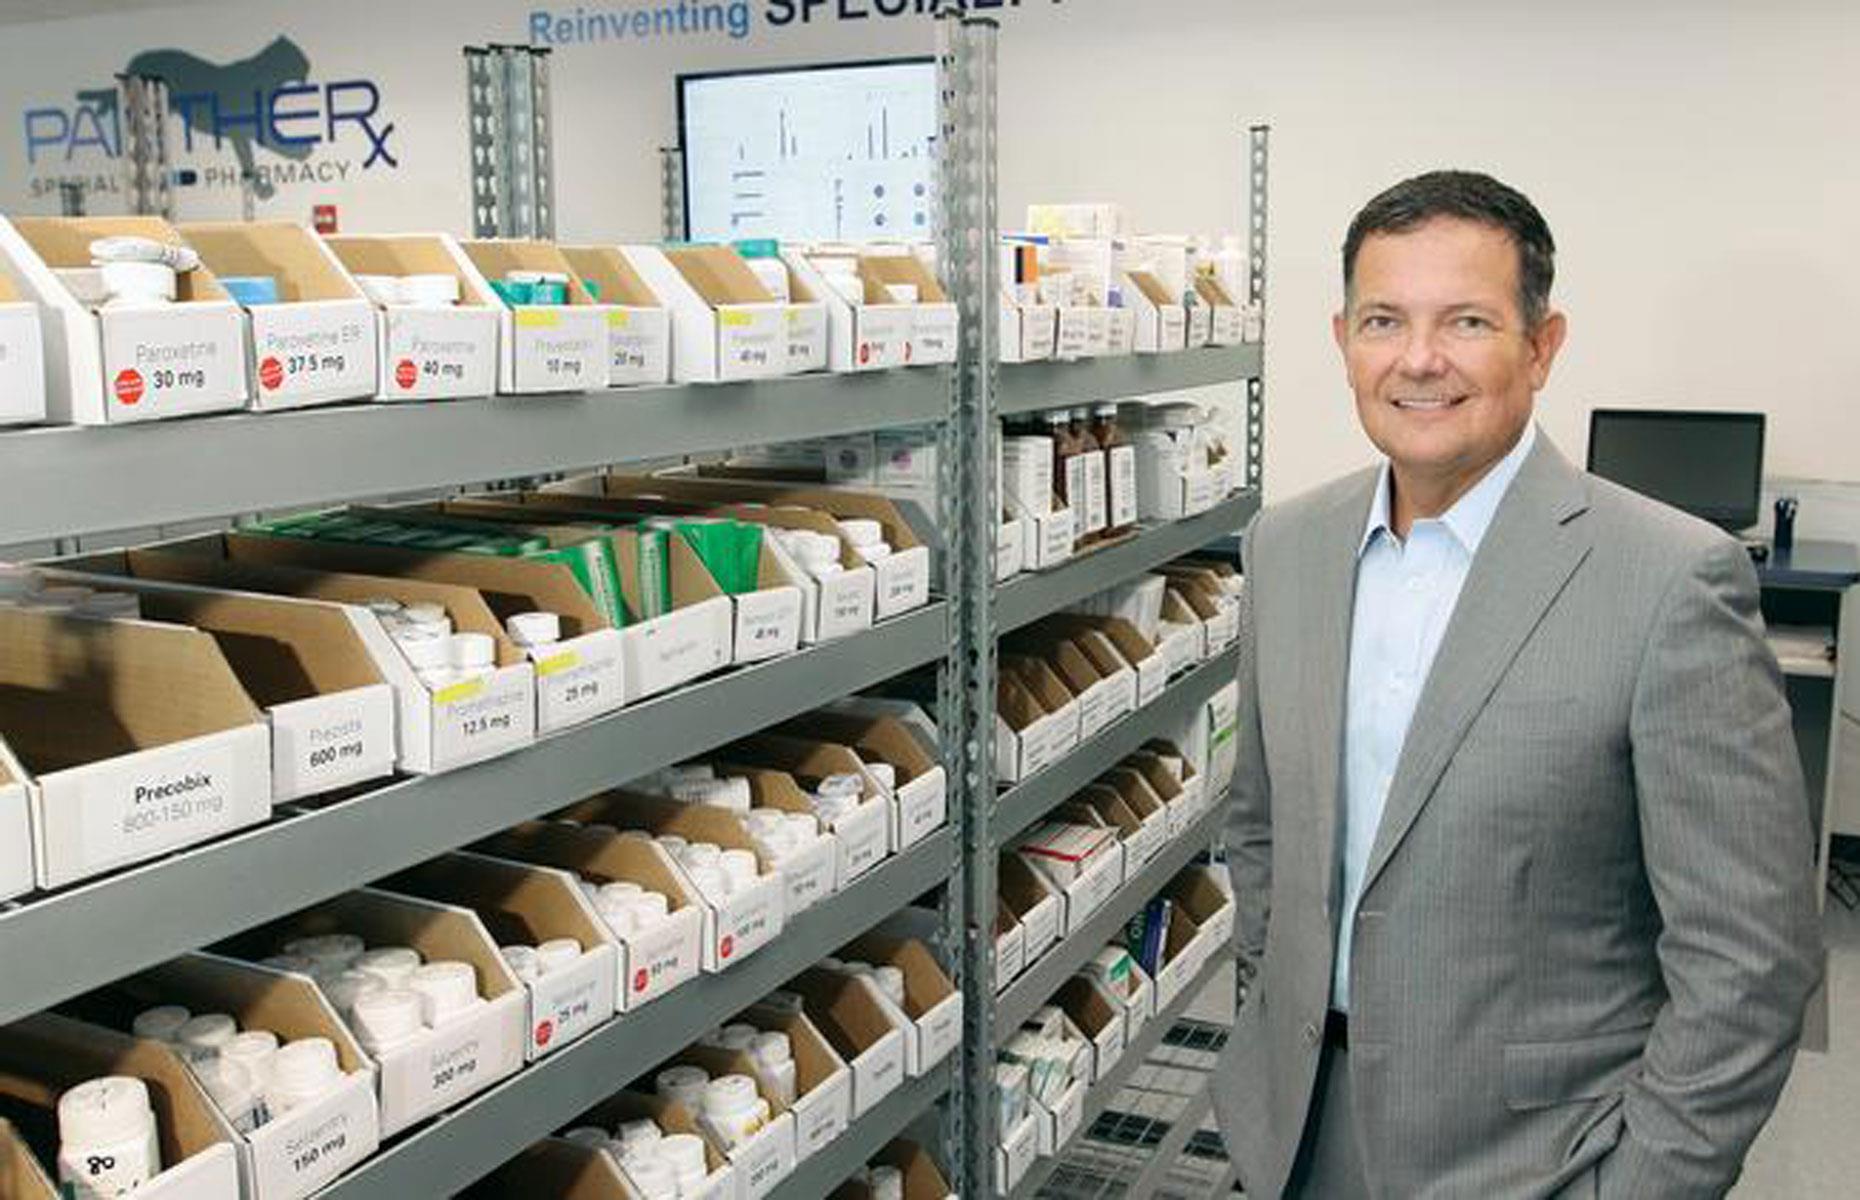 Pennsylvania: PANTHERx Specialty Pharmacy, 5,436%